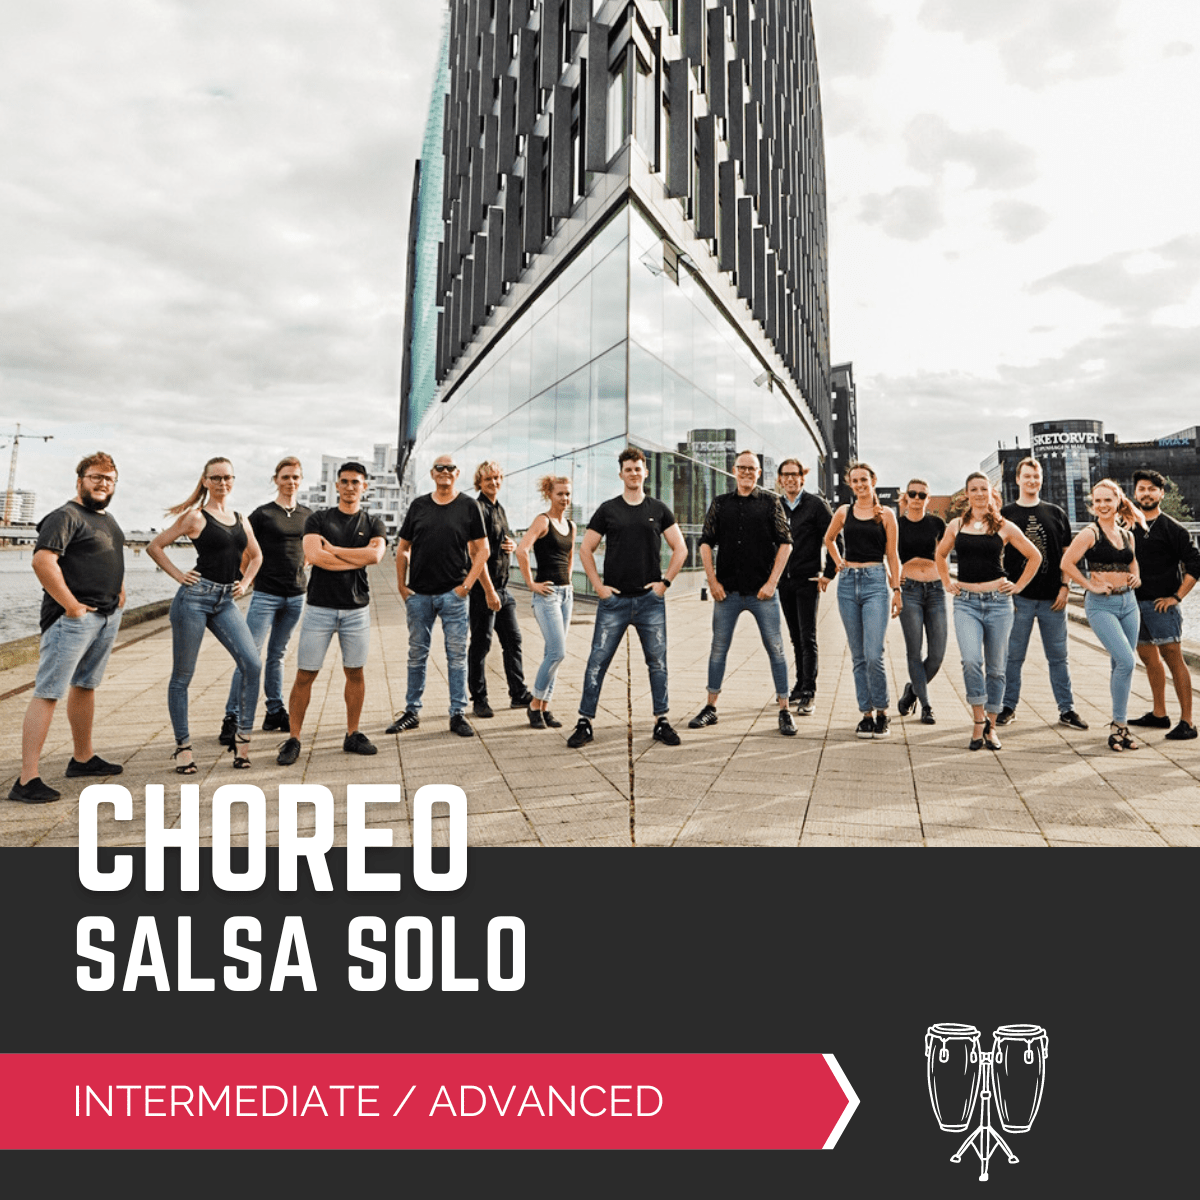 Salsa Choreo Salsa Choreographic, Salsa koreografi, Salsa København, Salsa Video